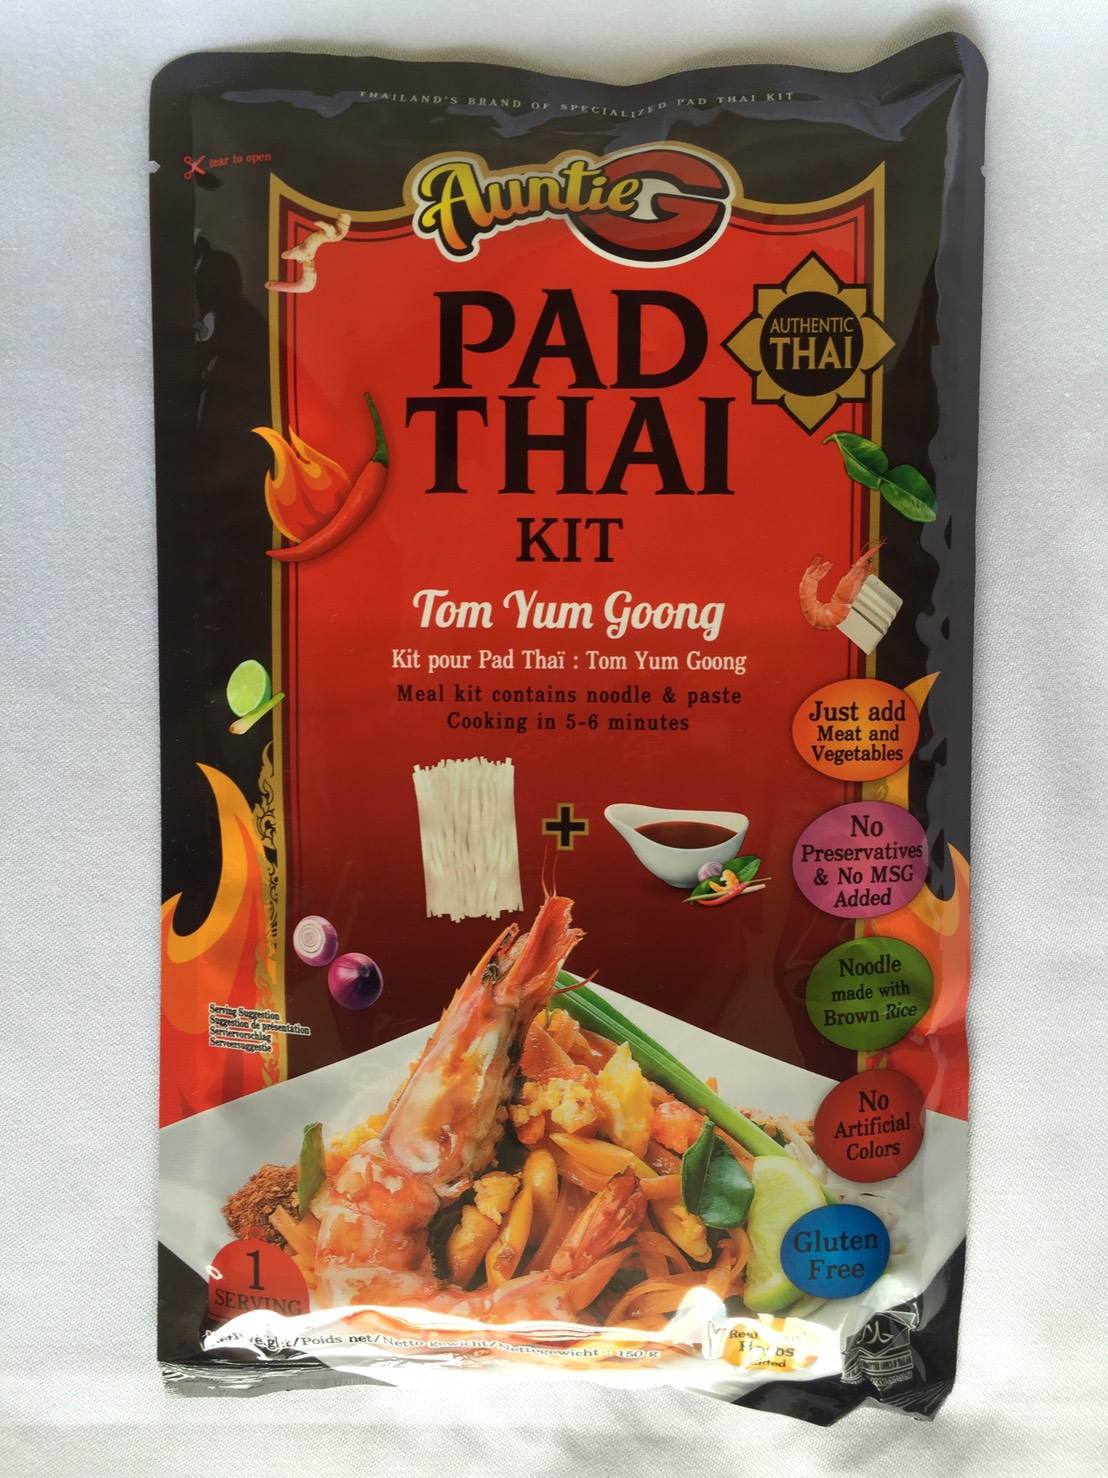 PAD THAI KIT - TOM YUM GOONG 